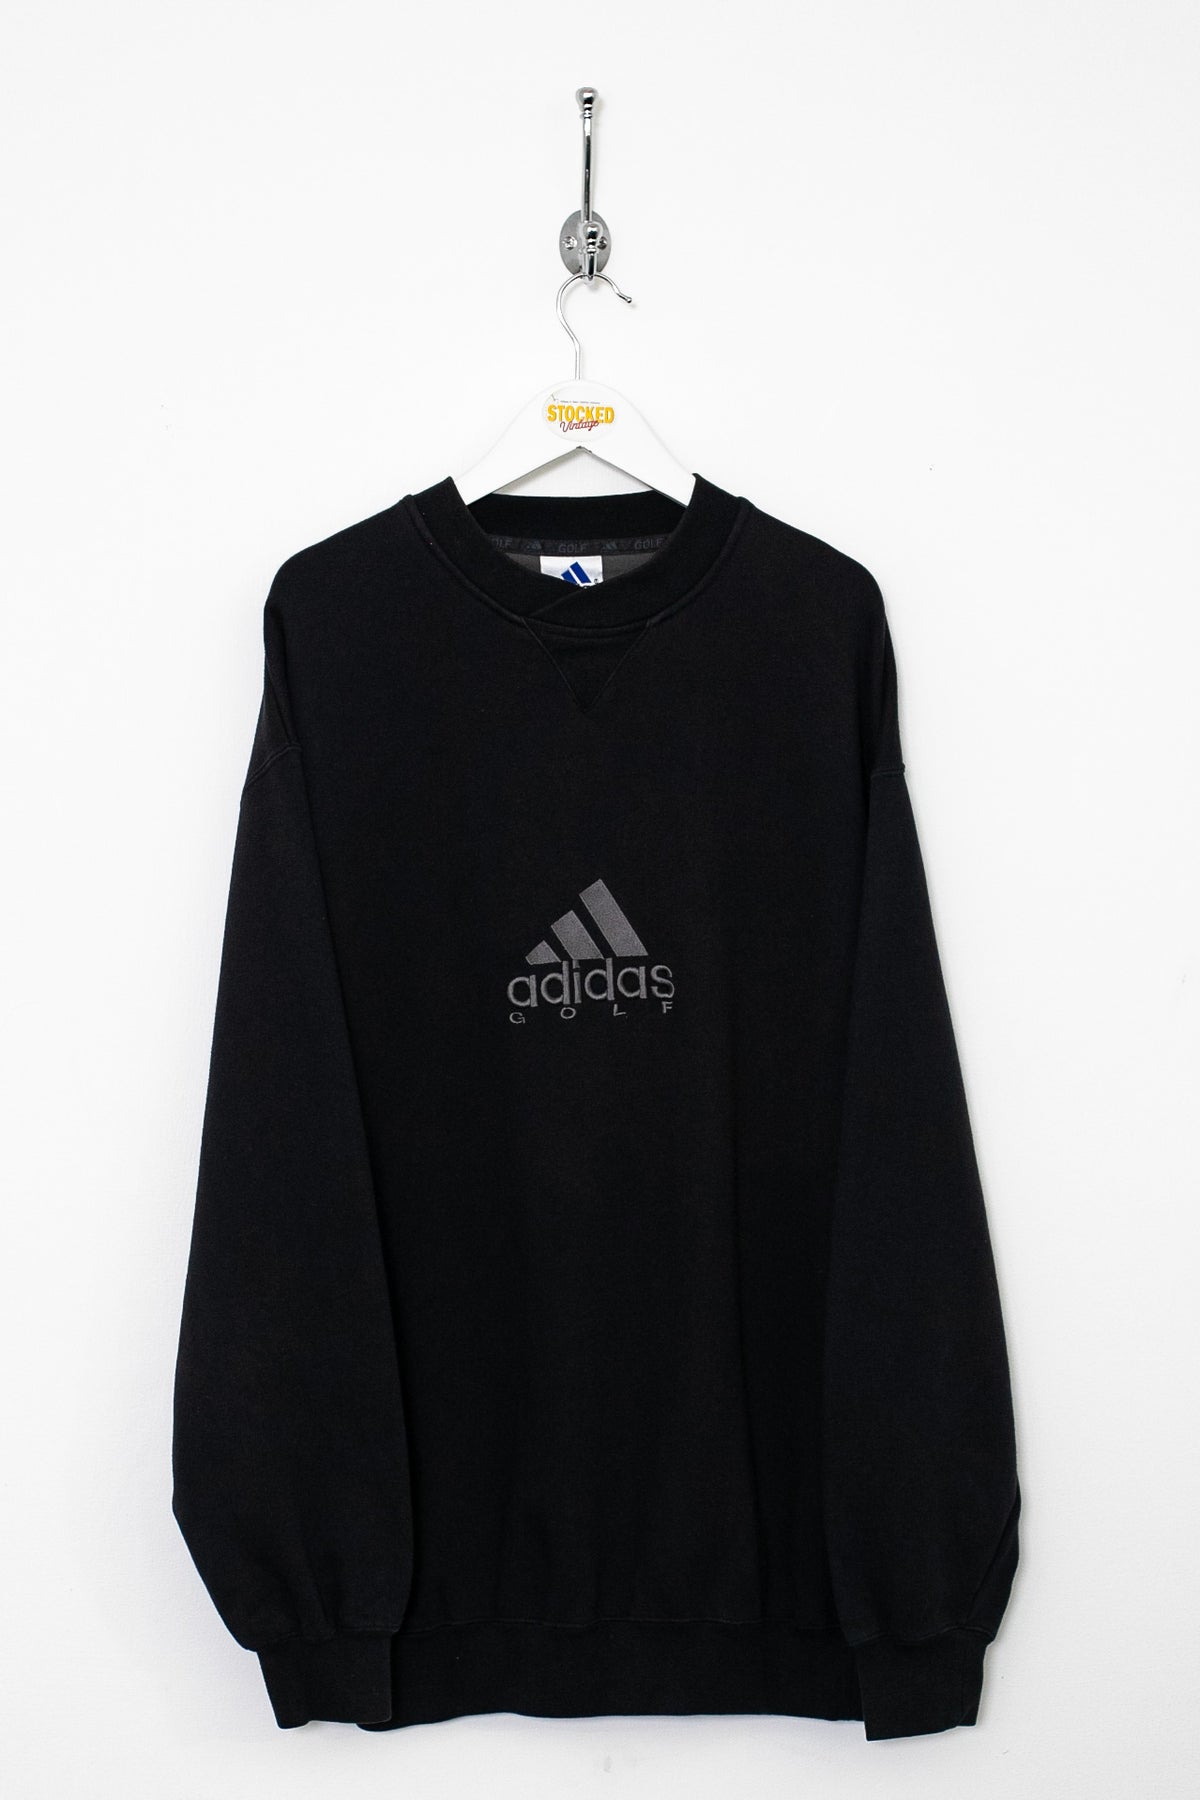 00s Adidas Golf Sweatshirt (L)